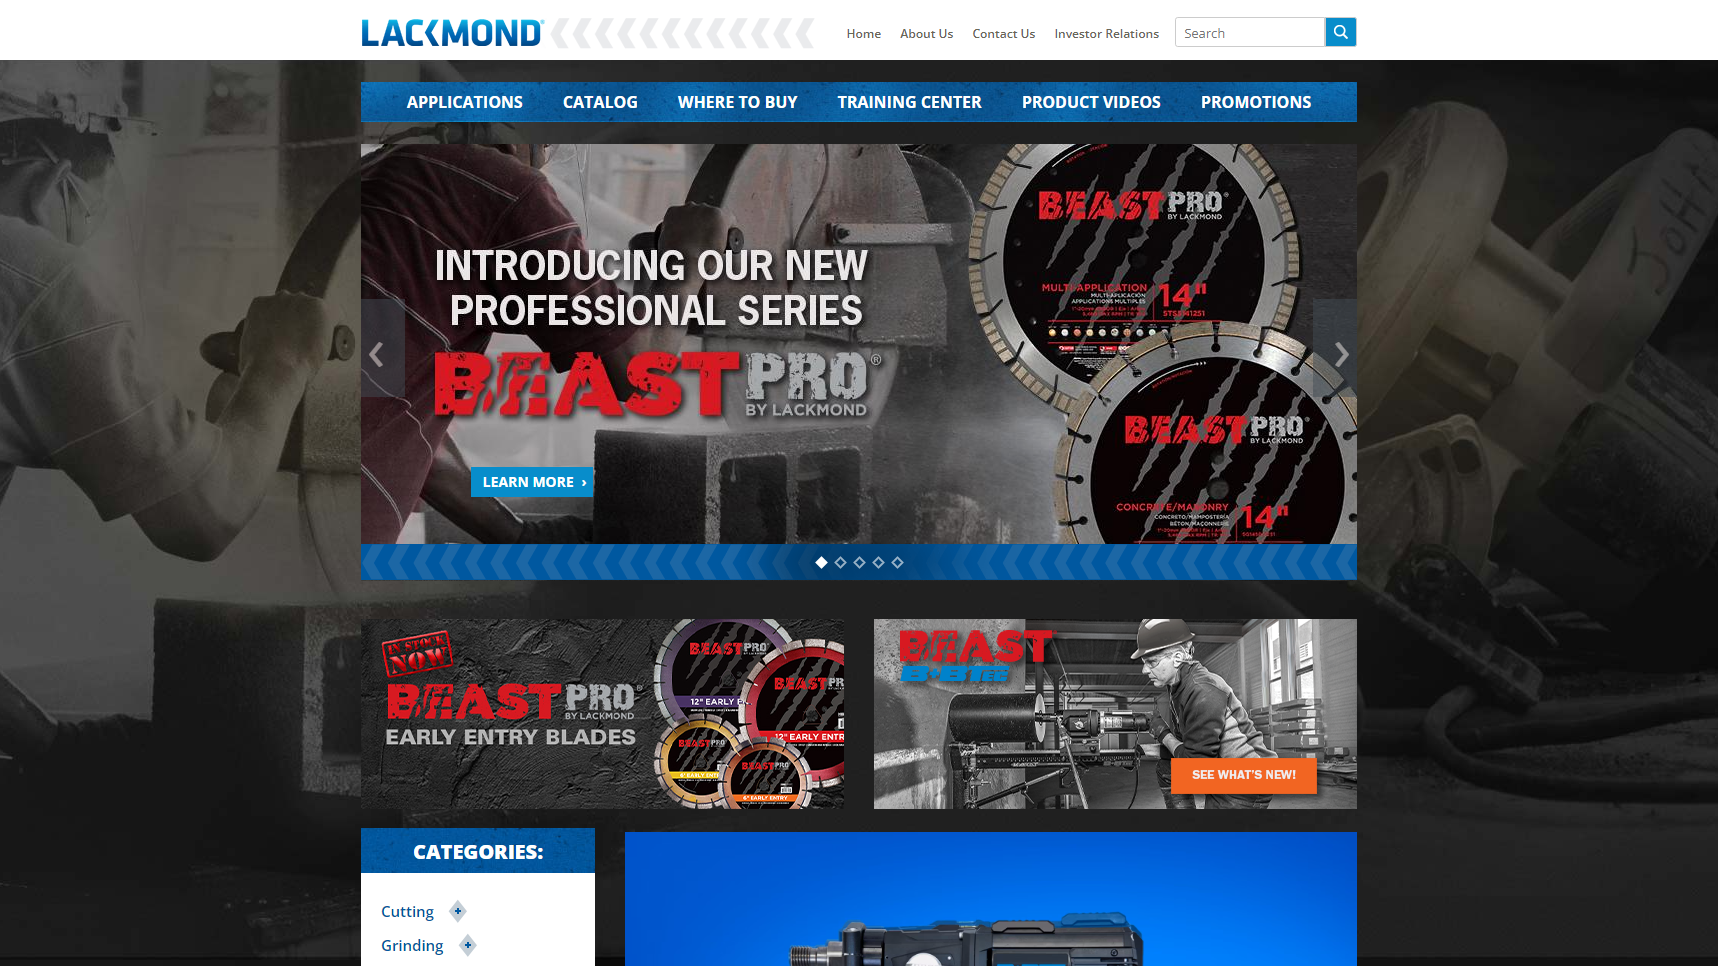 Lackmond - Diamond Cutting Tool Manufacturer